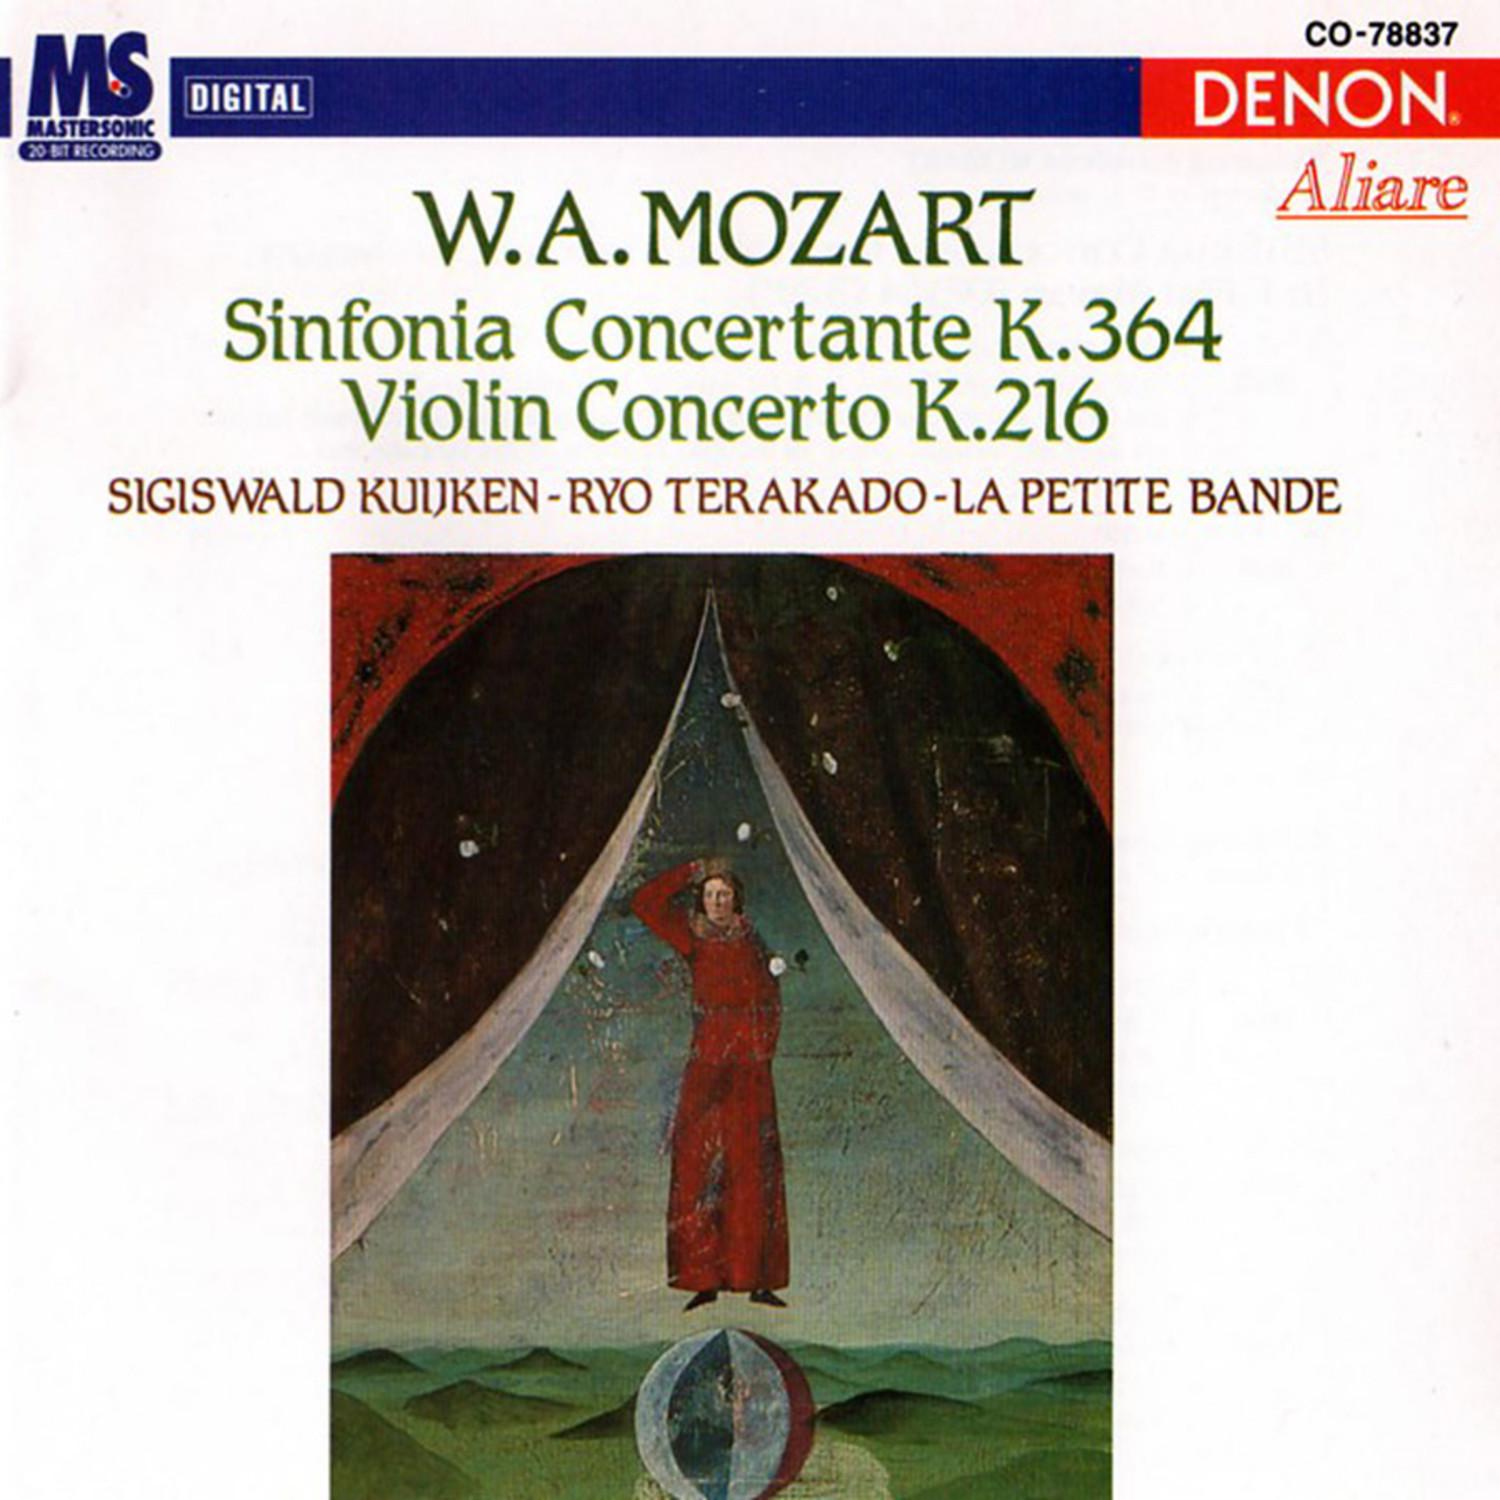 Sinfonia Concertante in E-Flat Major, K. 364: III. Presto